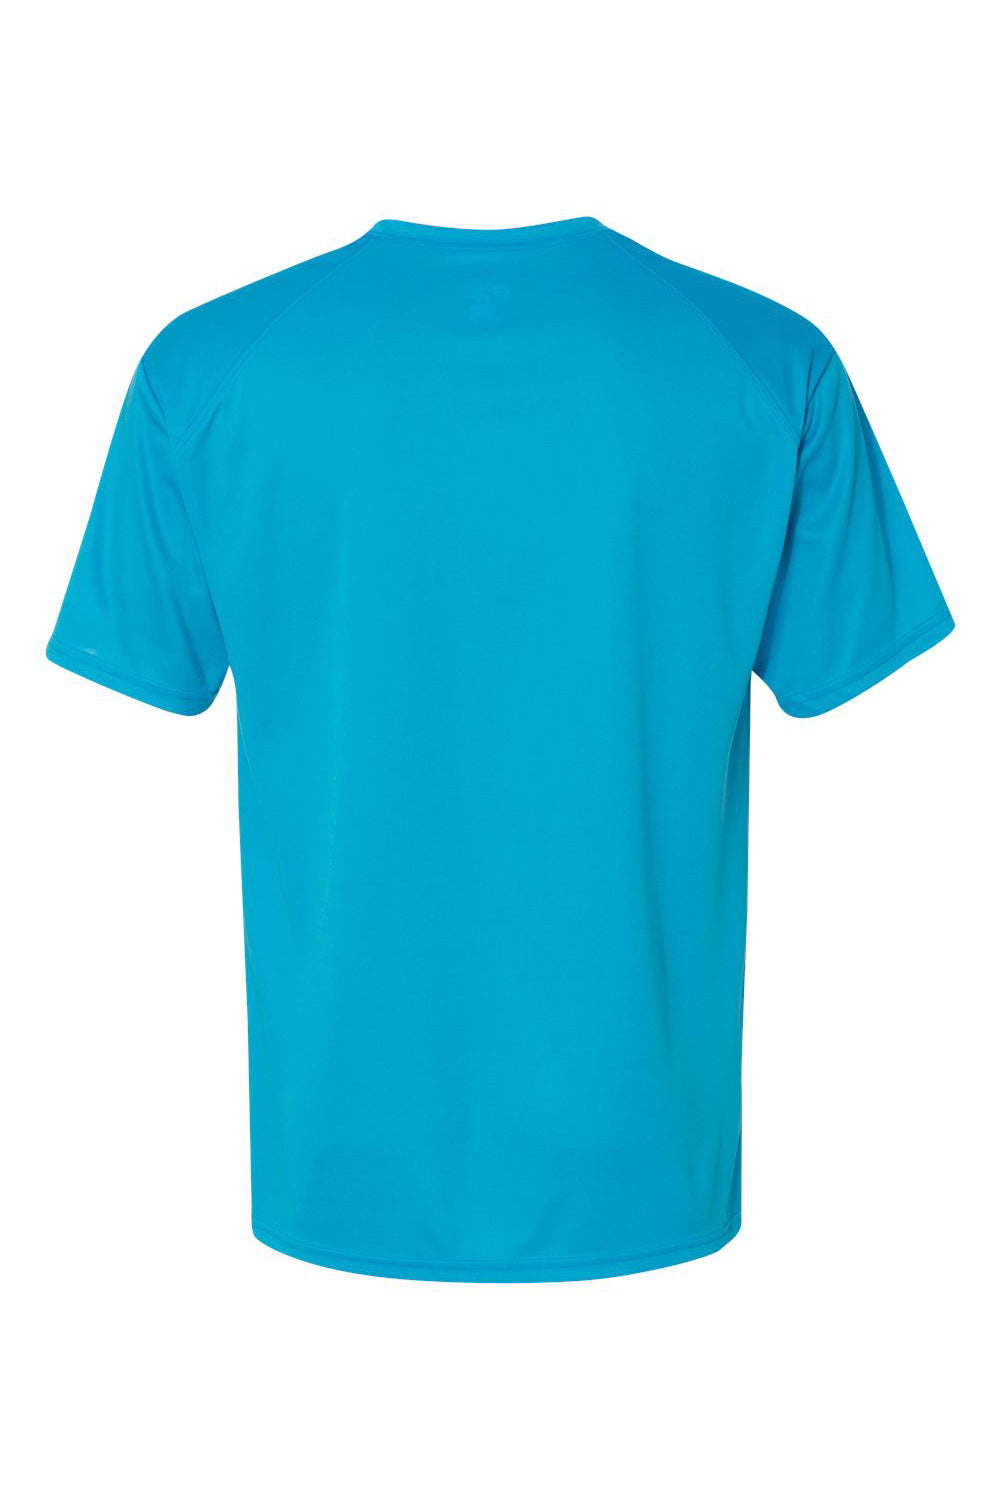 Badger 4120 Mens B-Core Moisture Wicking Short Sleeve Crewneck T-Shirt Electric Blue Flat Back